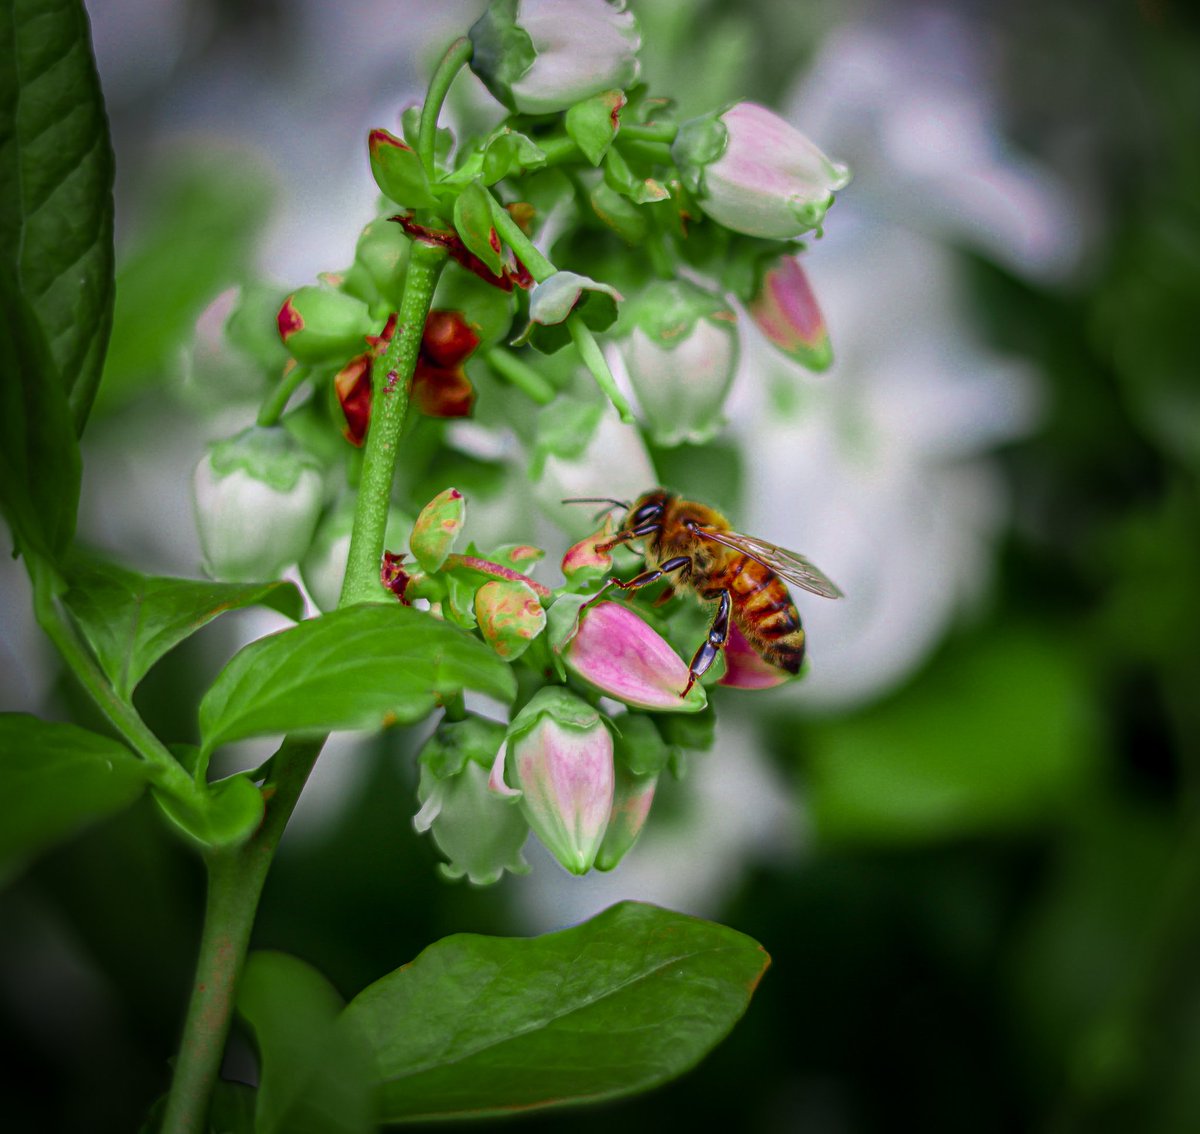 Busy bees get the honey 
•
•
•
•
#Canon #Canonphotography #Canon90D #bestofthebaystate #raw_boston #Boston #bostonspring #spring #honeybees #photography